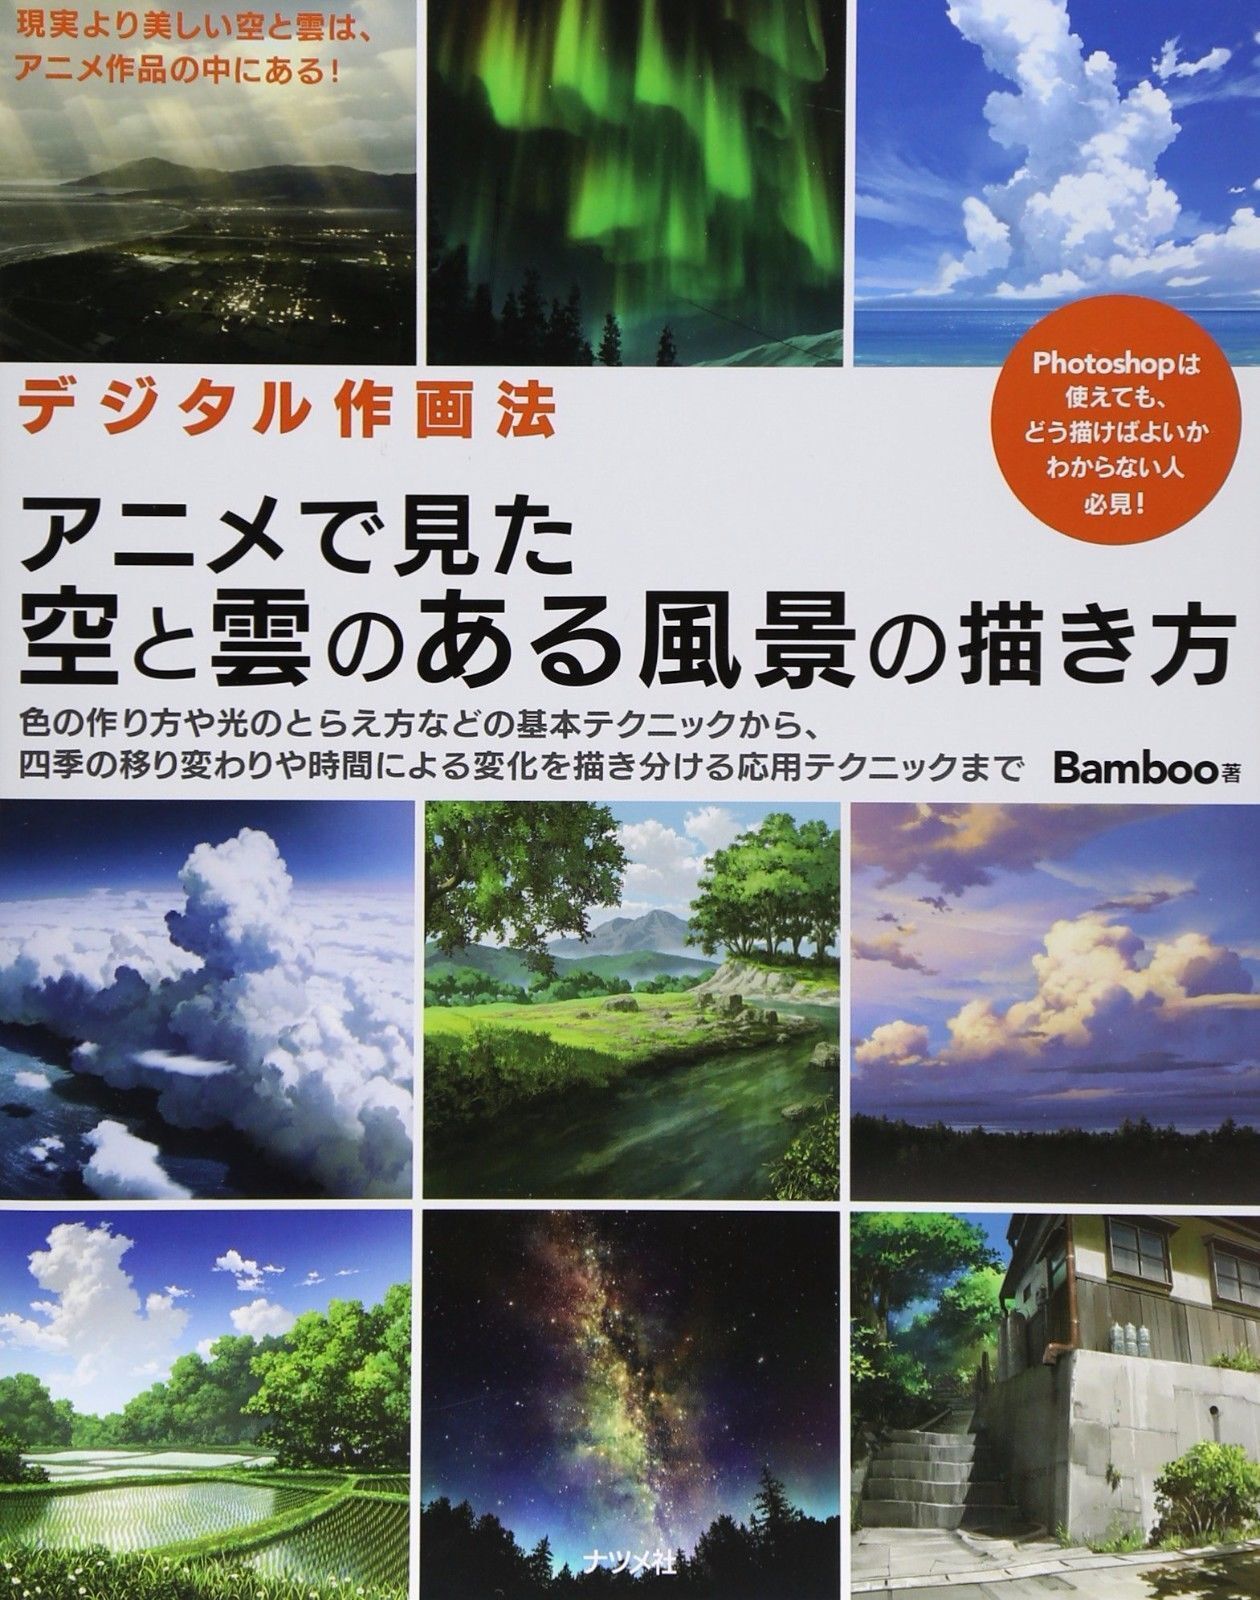 How to Draw Manga Anime Landscape Technique Book / Japan art photoshop |  eBay